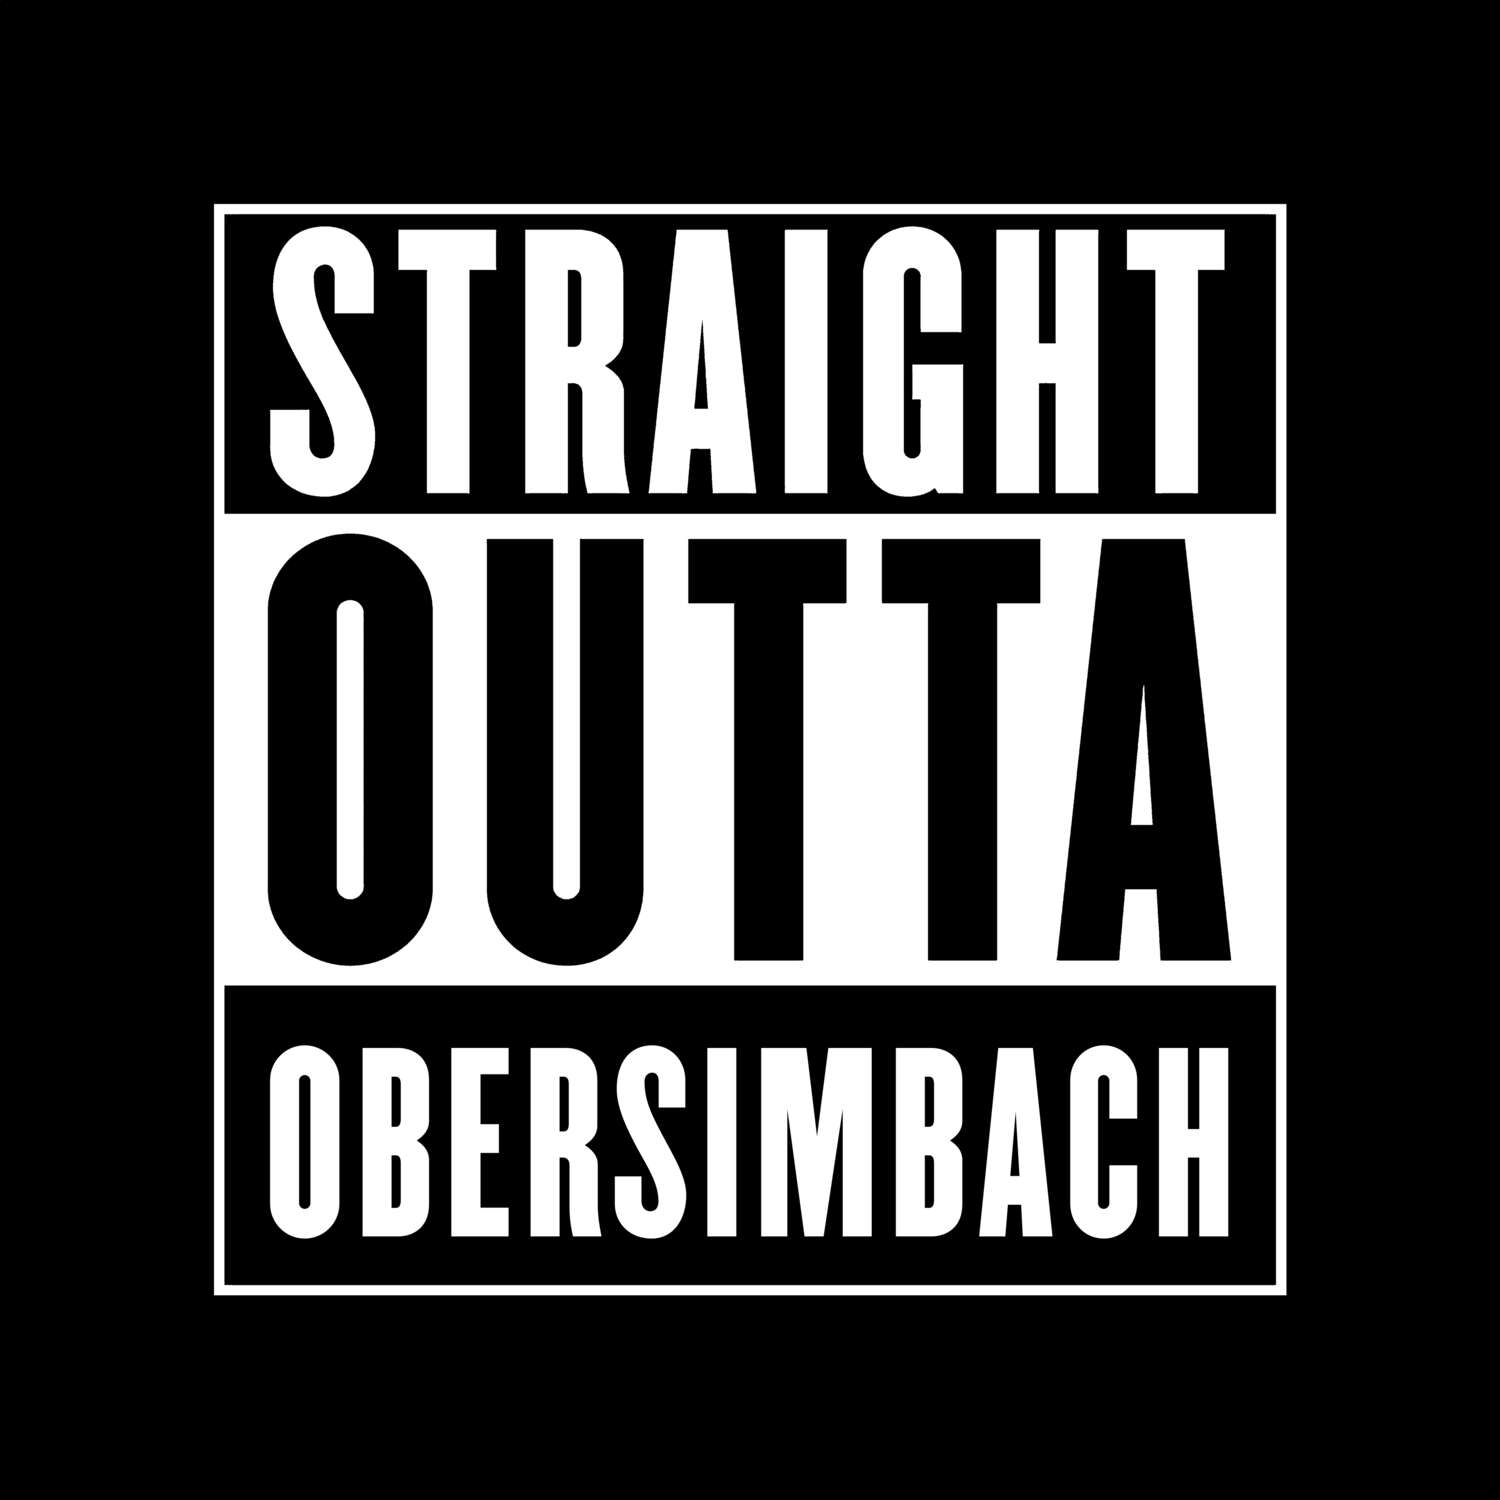 Obersimbach T-Shirt »Straight Outta«